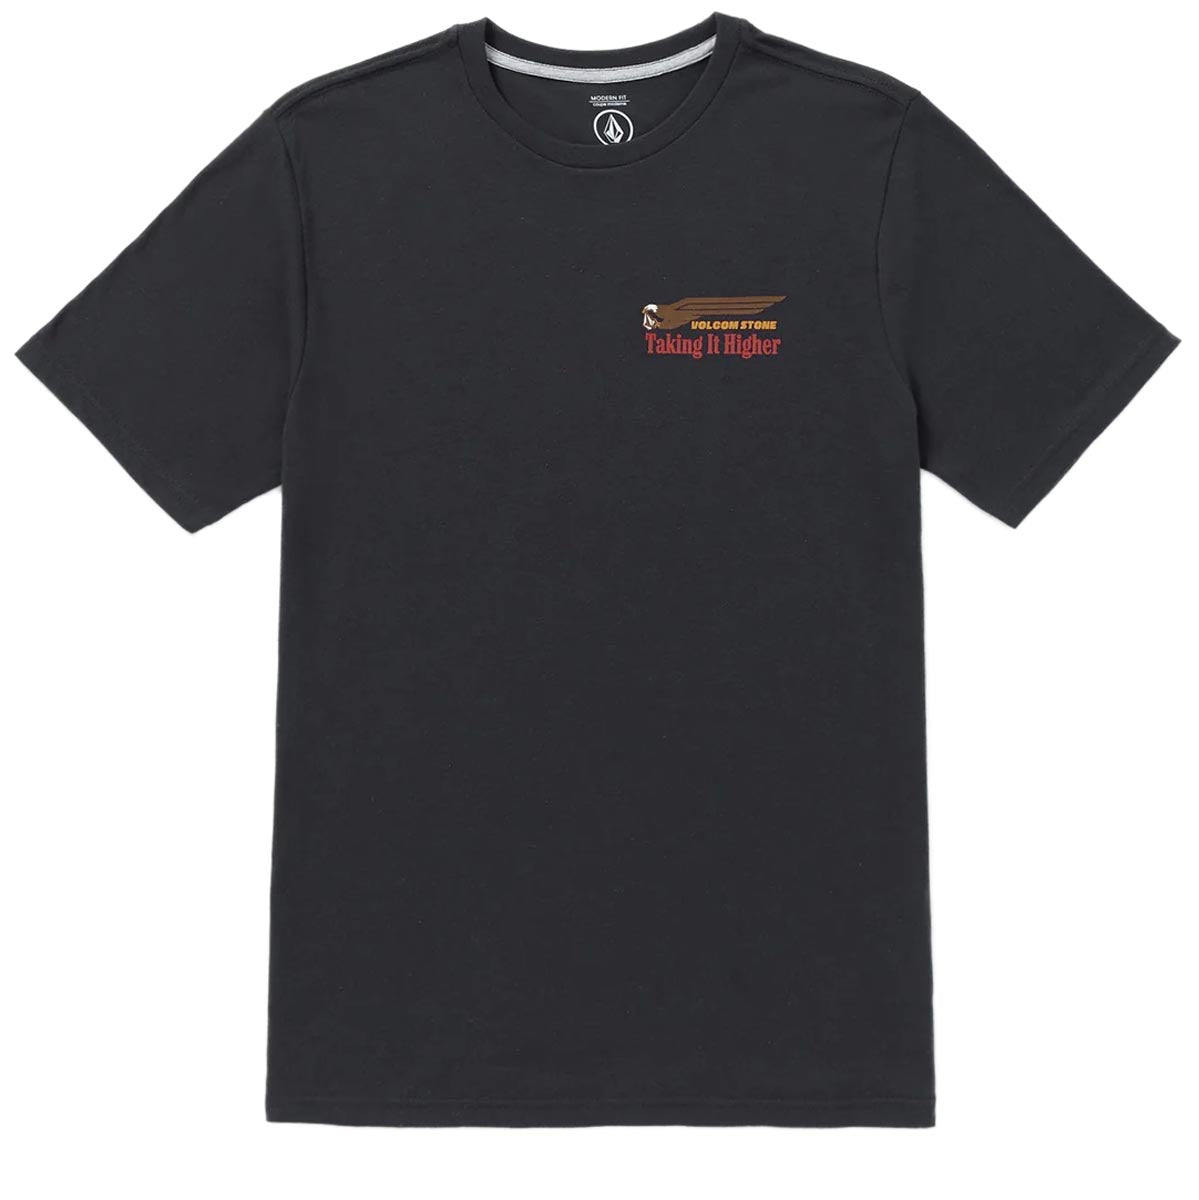 Volcom Take It Higher T-Shirt - Washed Black Heather image 1